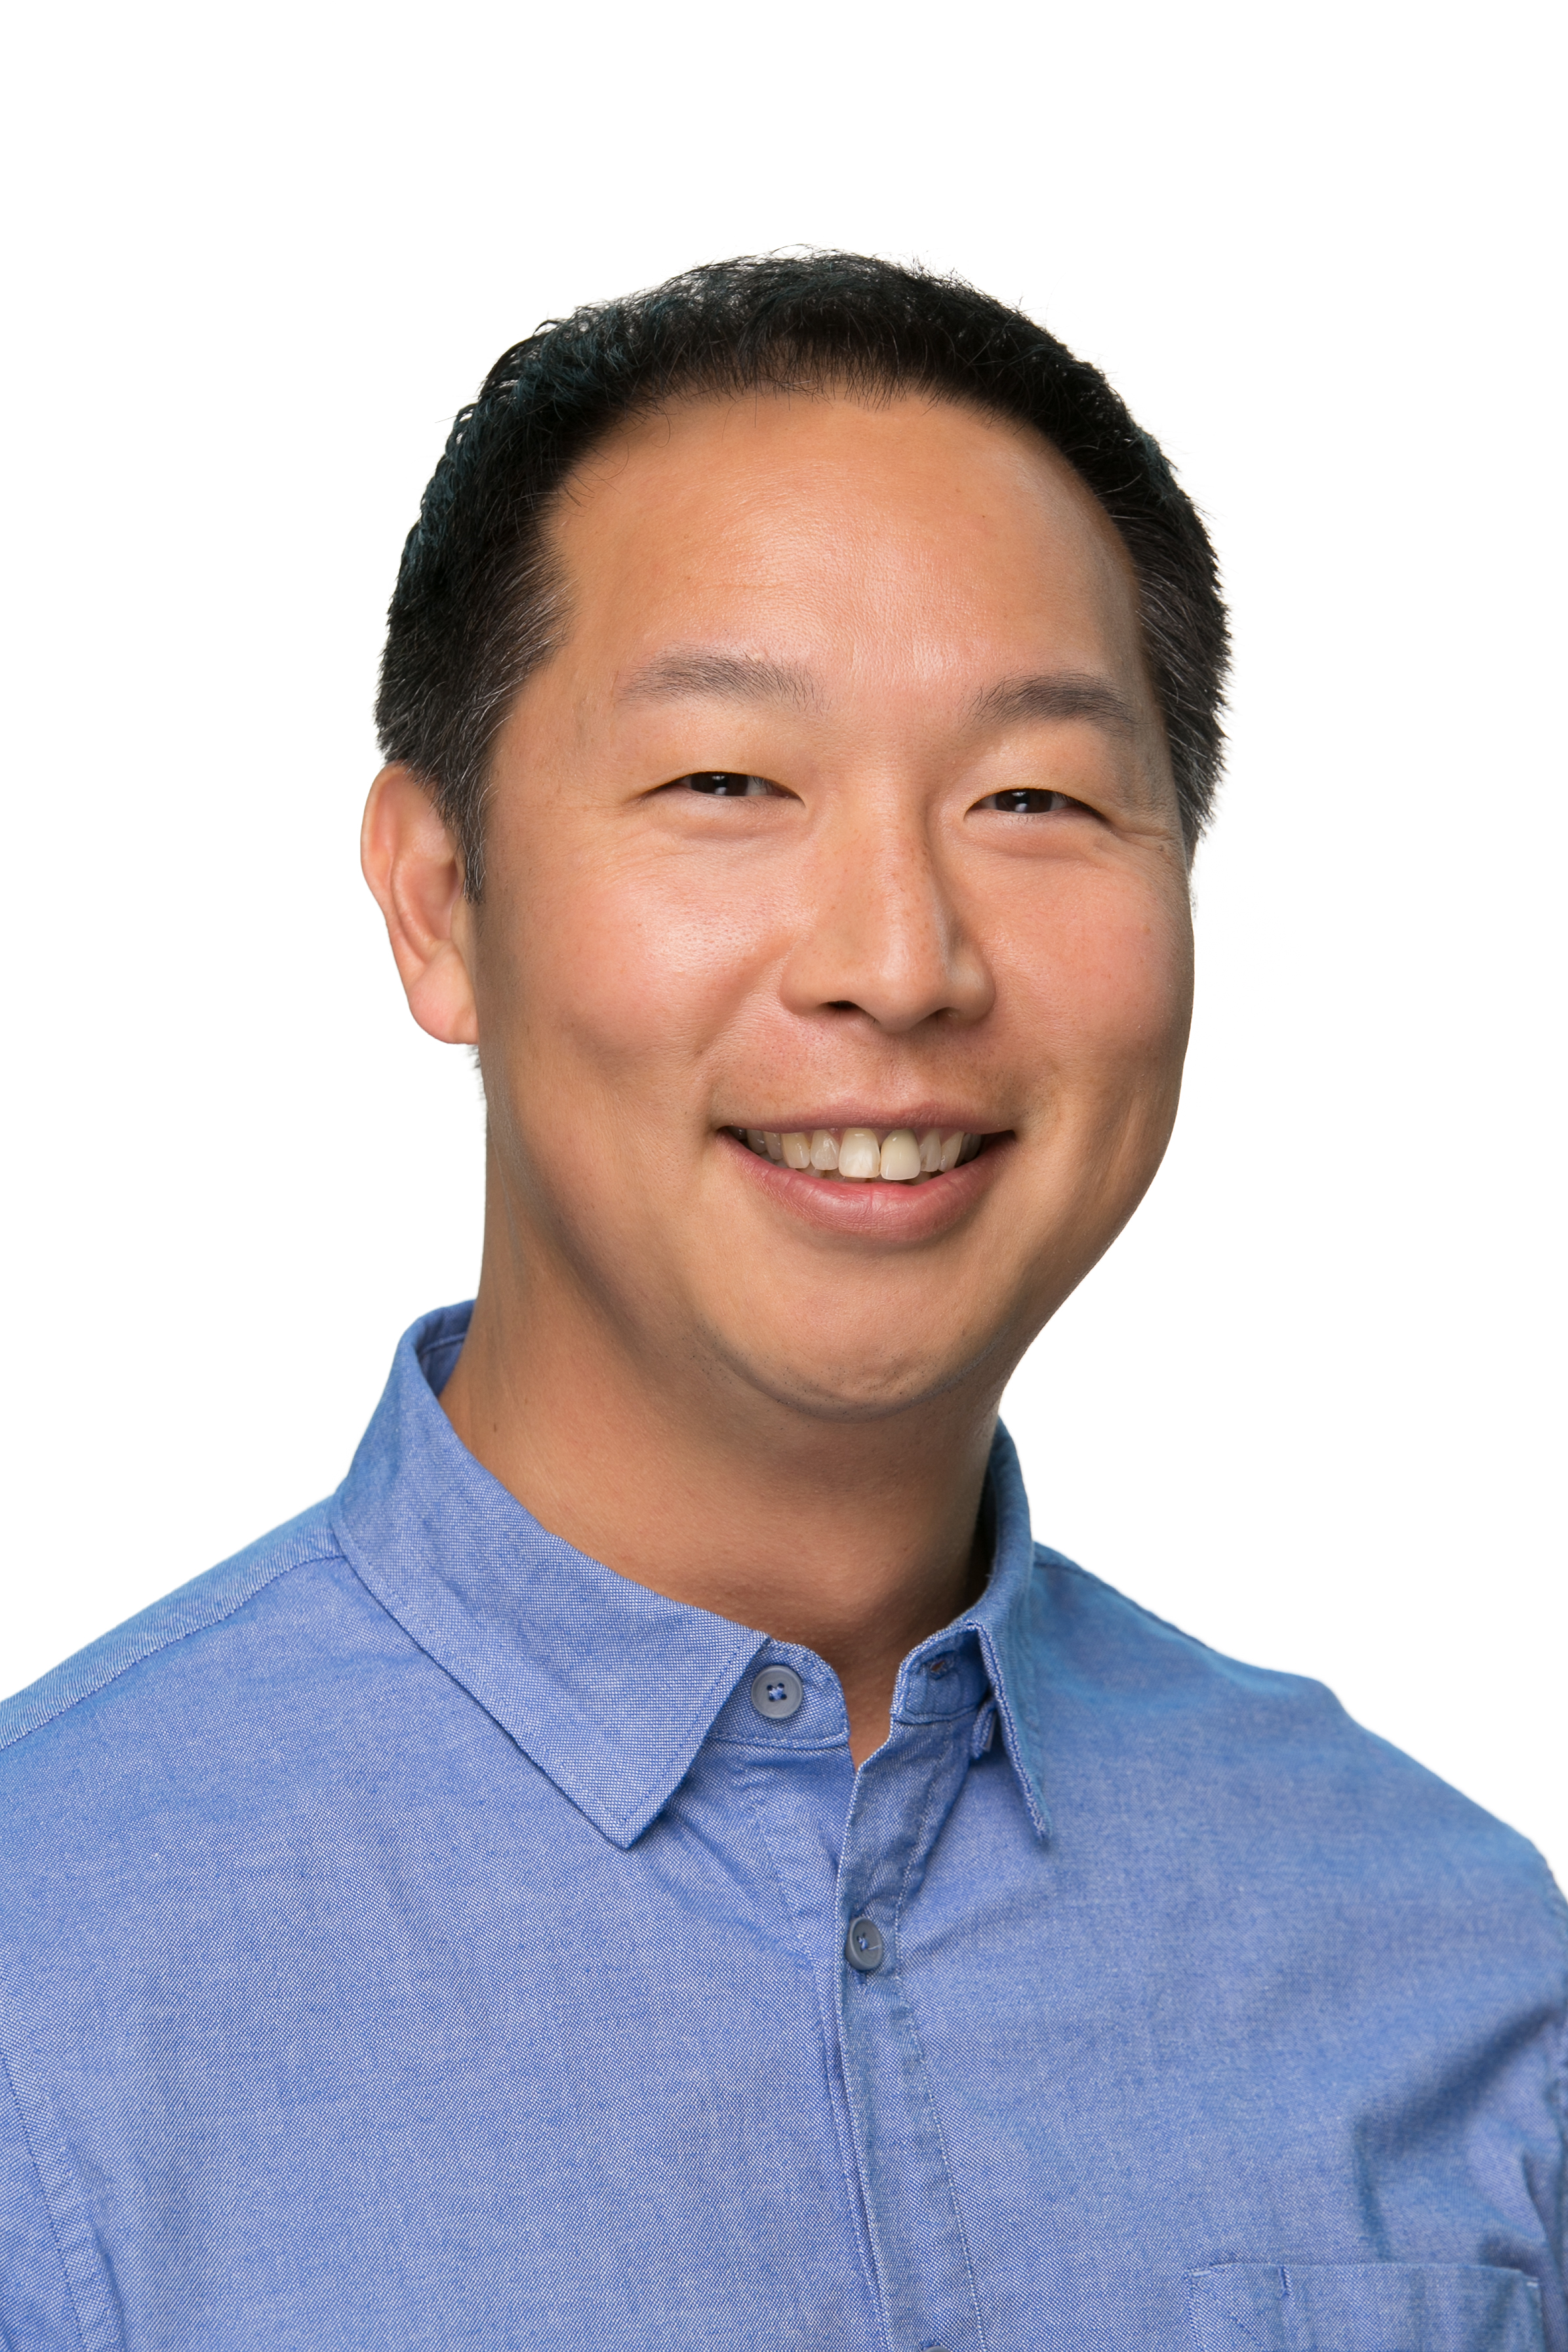 Andrew Choi | Des Plaines, IL Life Insurance | HealthMarkets Licensed Agent